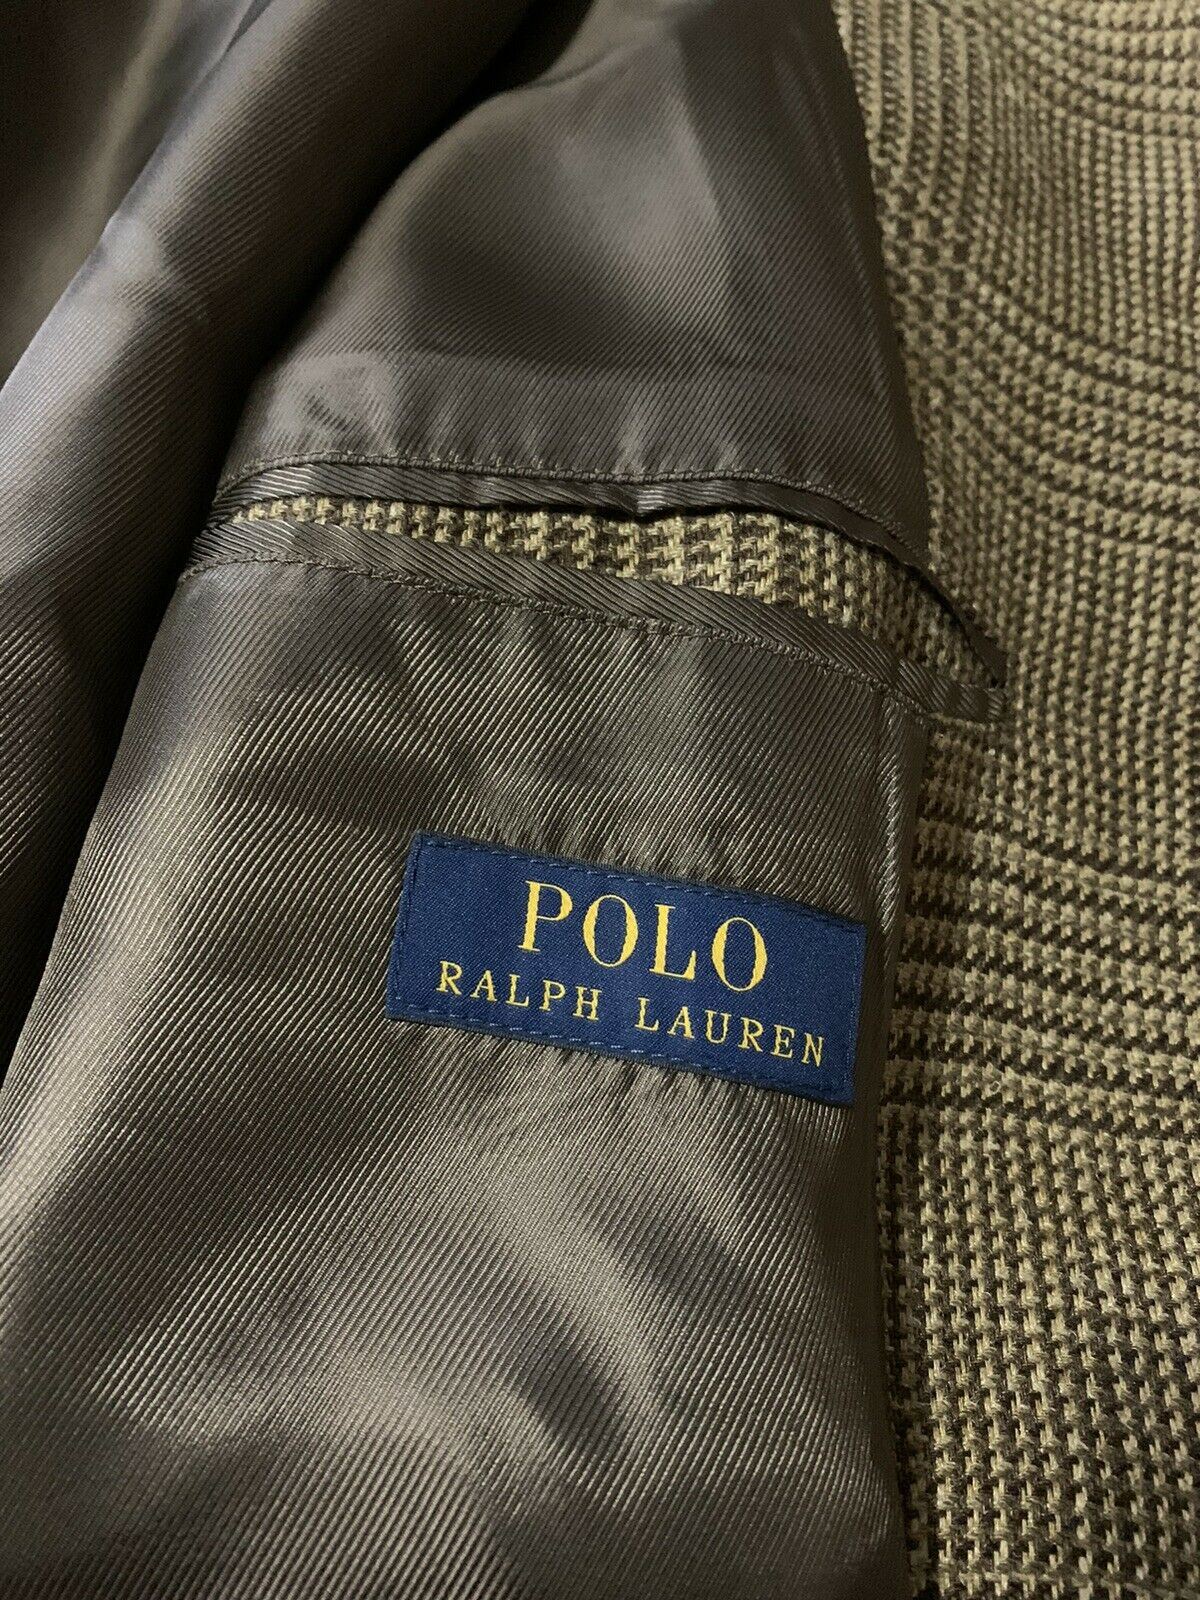 Neu$1195 Polo Ralph Lauren Herren-Mantel aus Leinen/Seide, Trenchcoat, Braun, 44L US